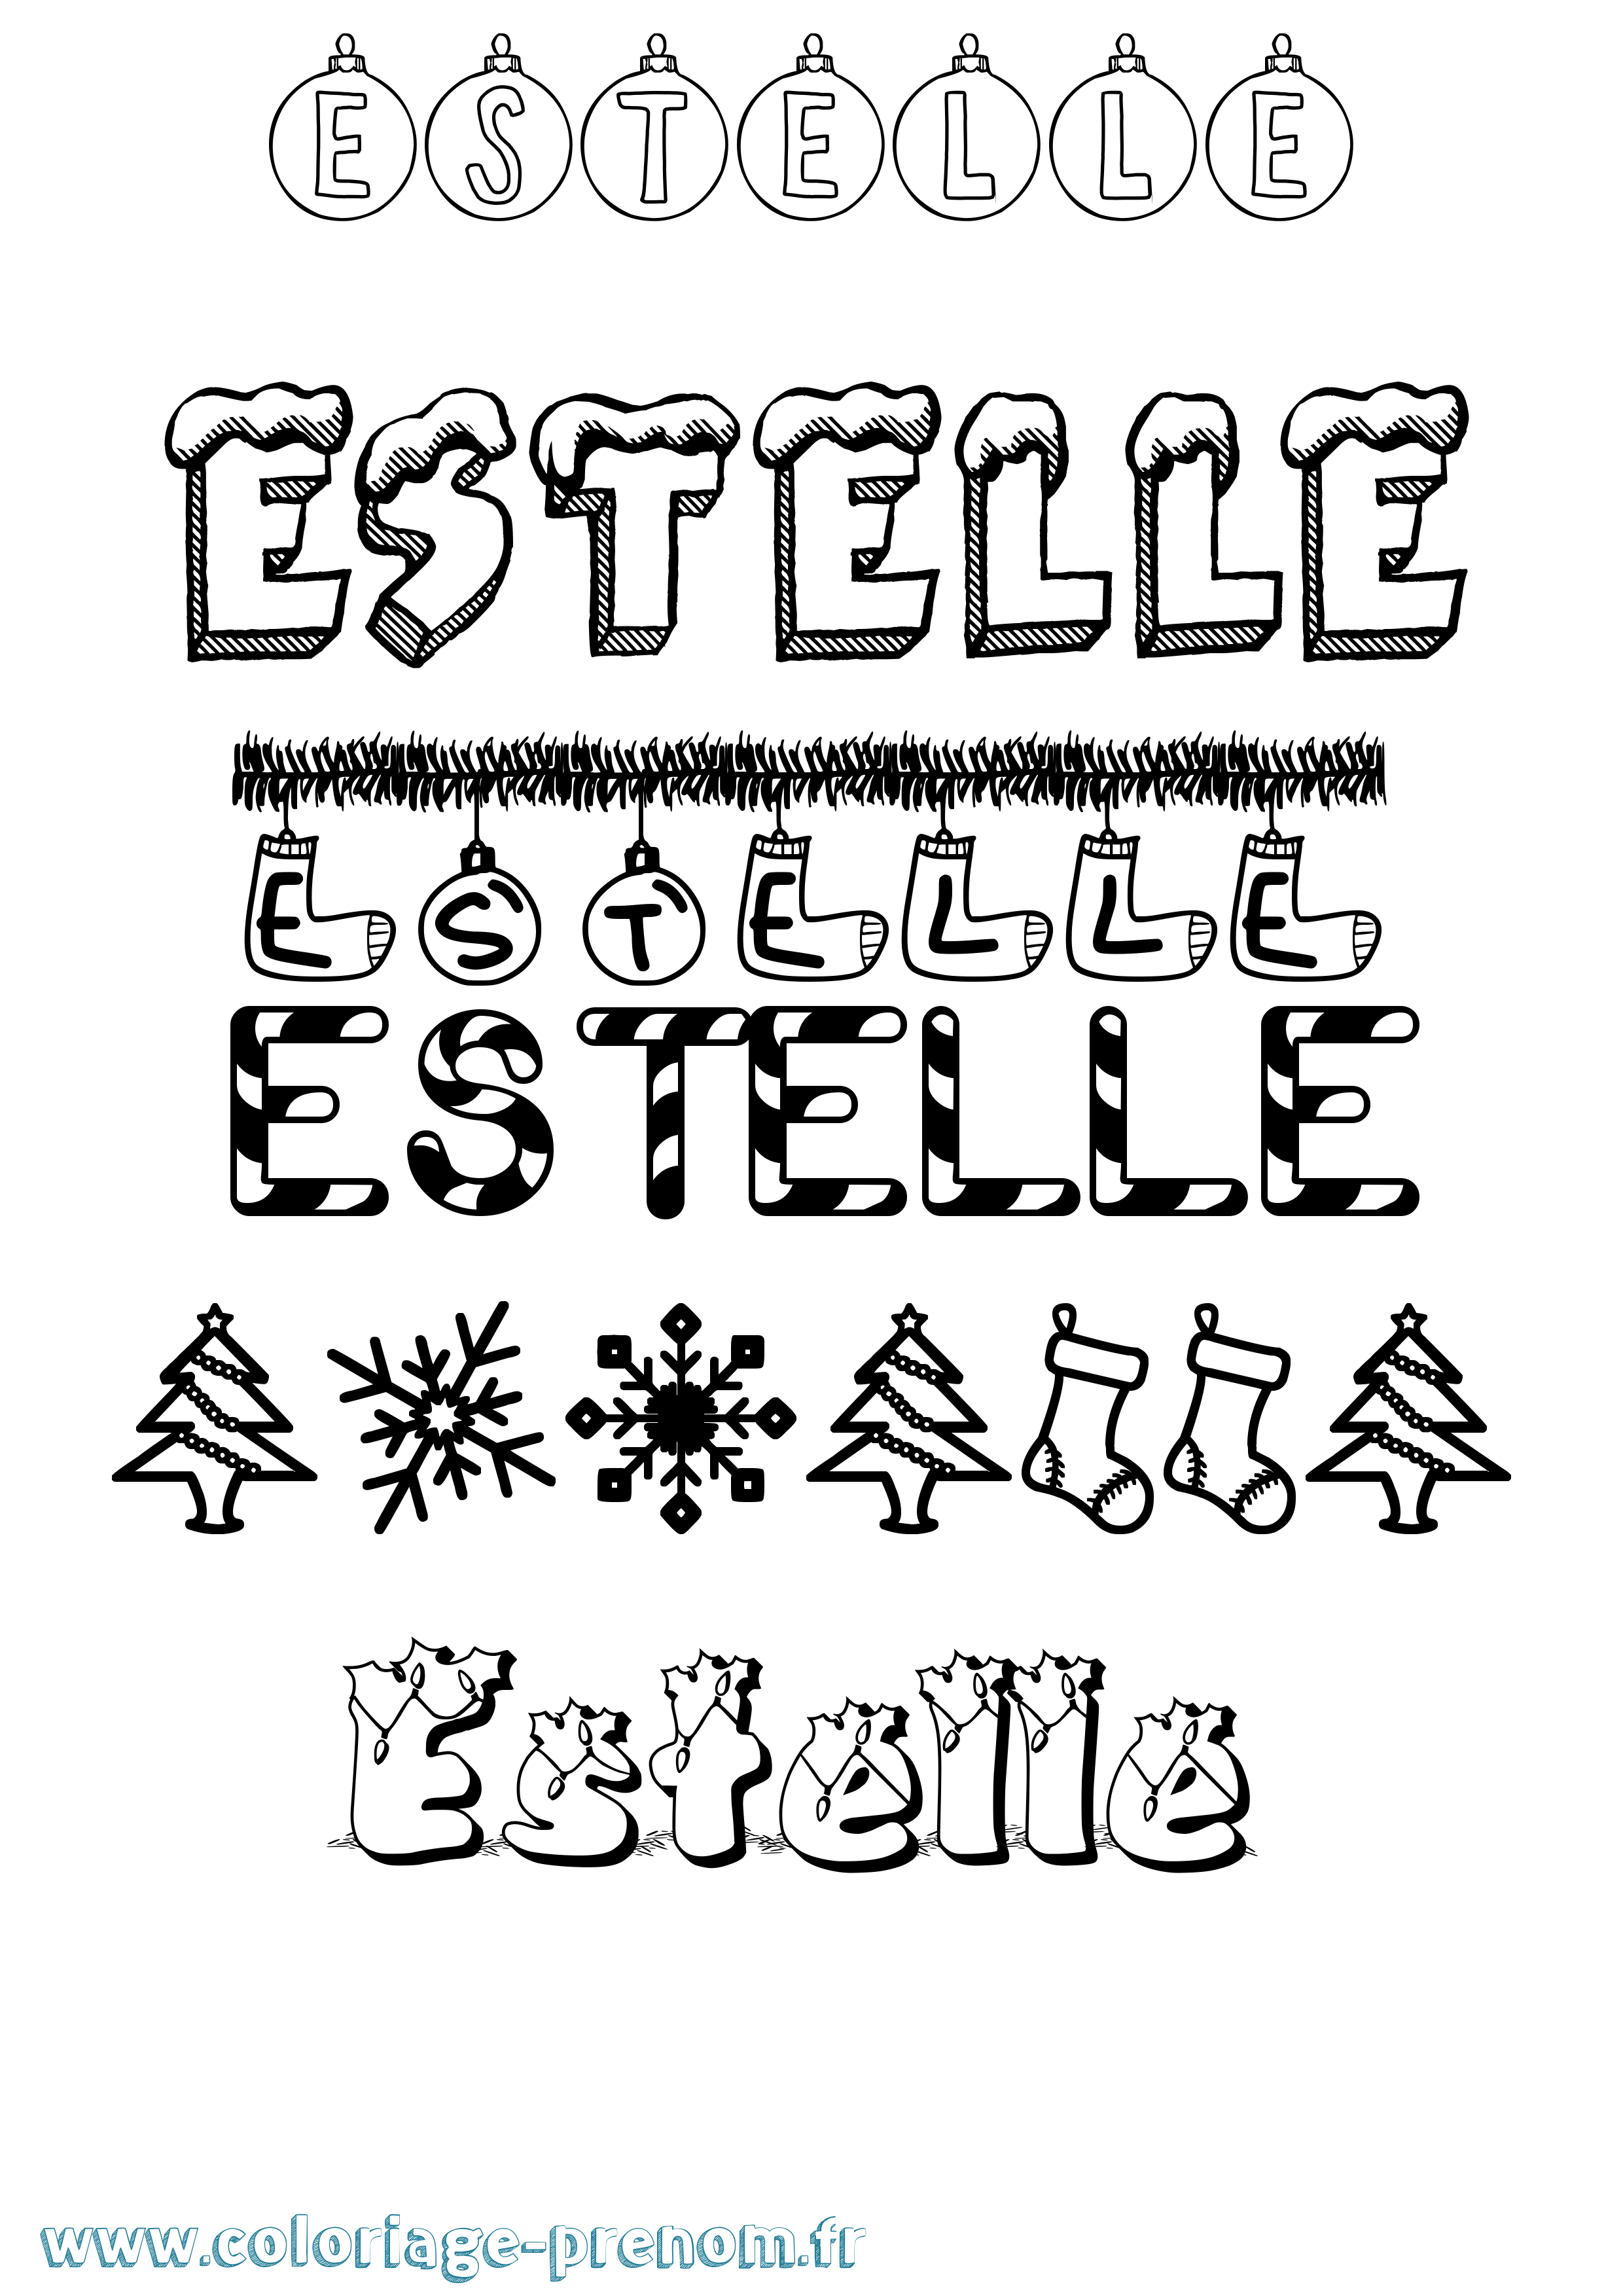 Coloriage prénom Estelle